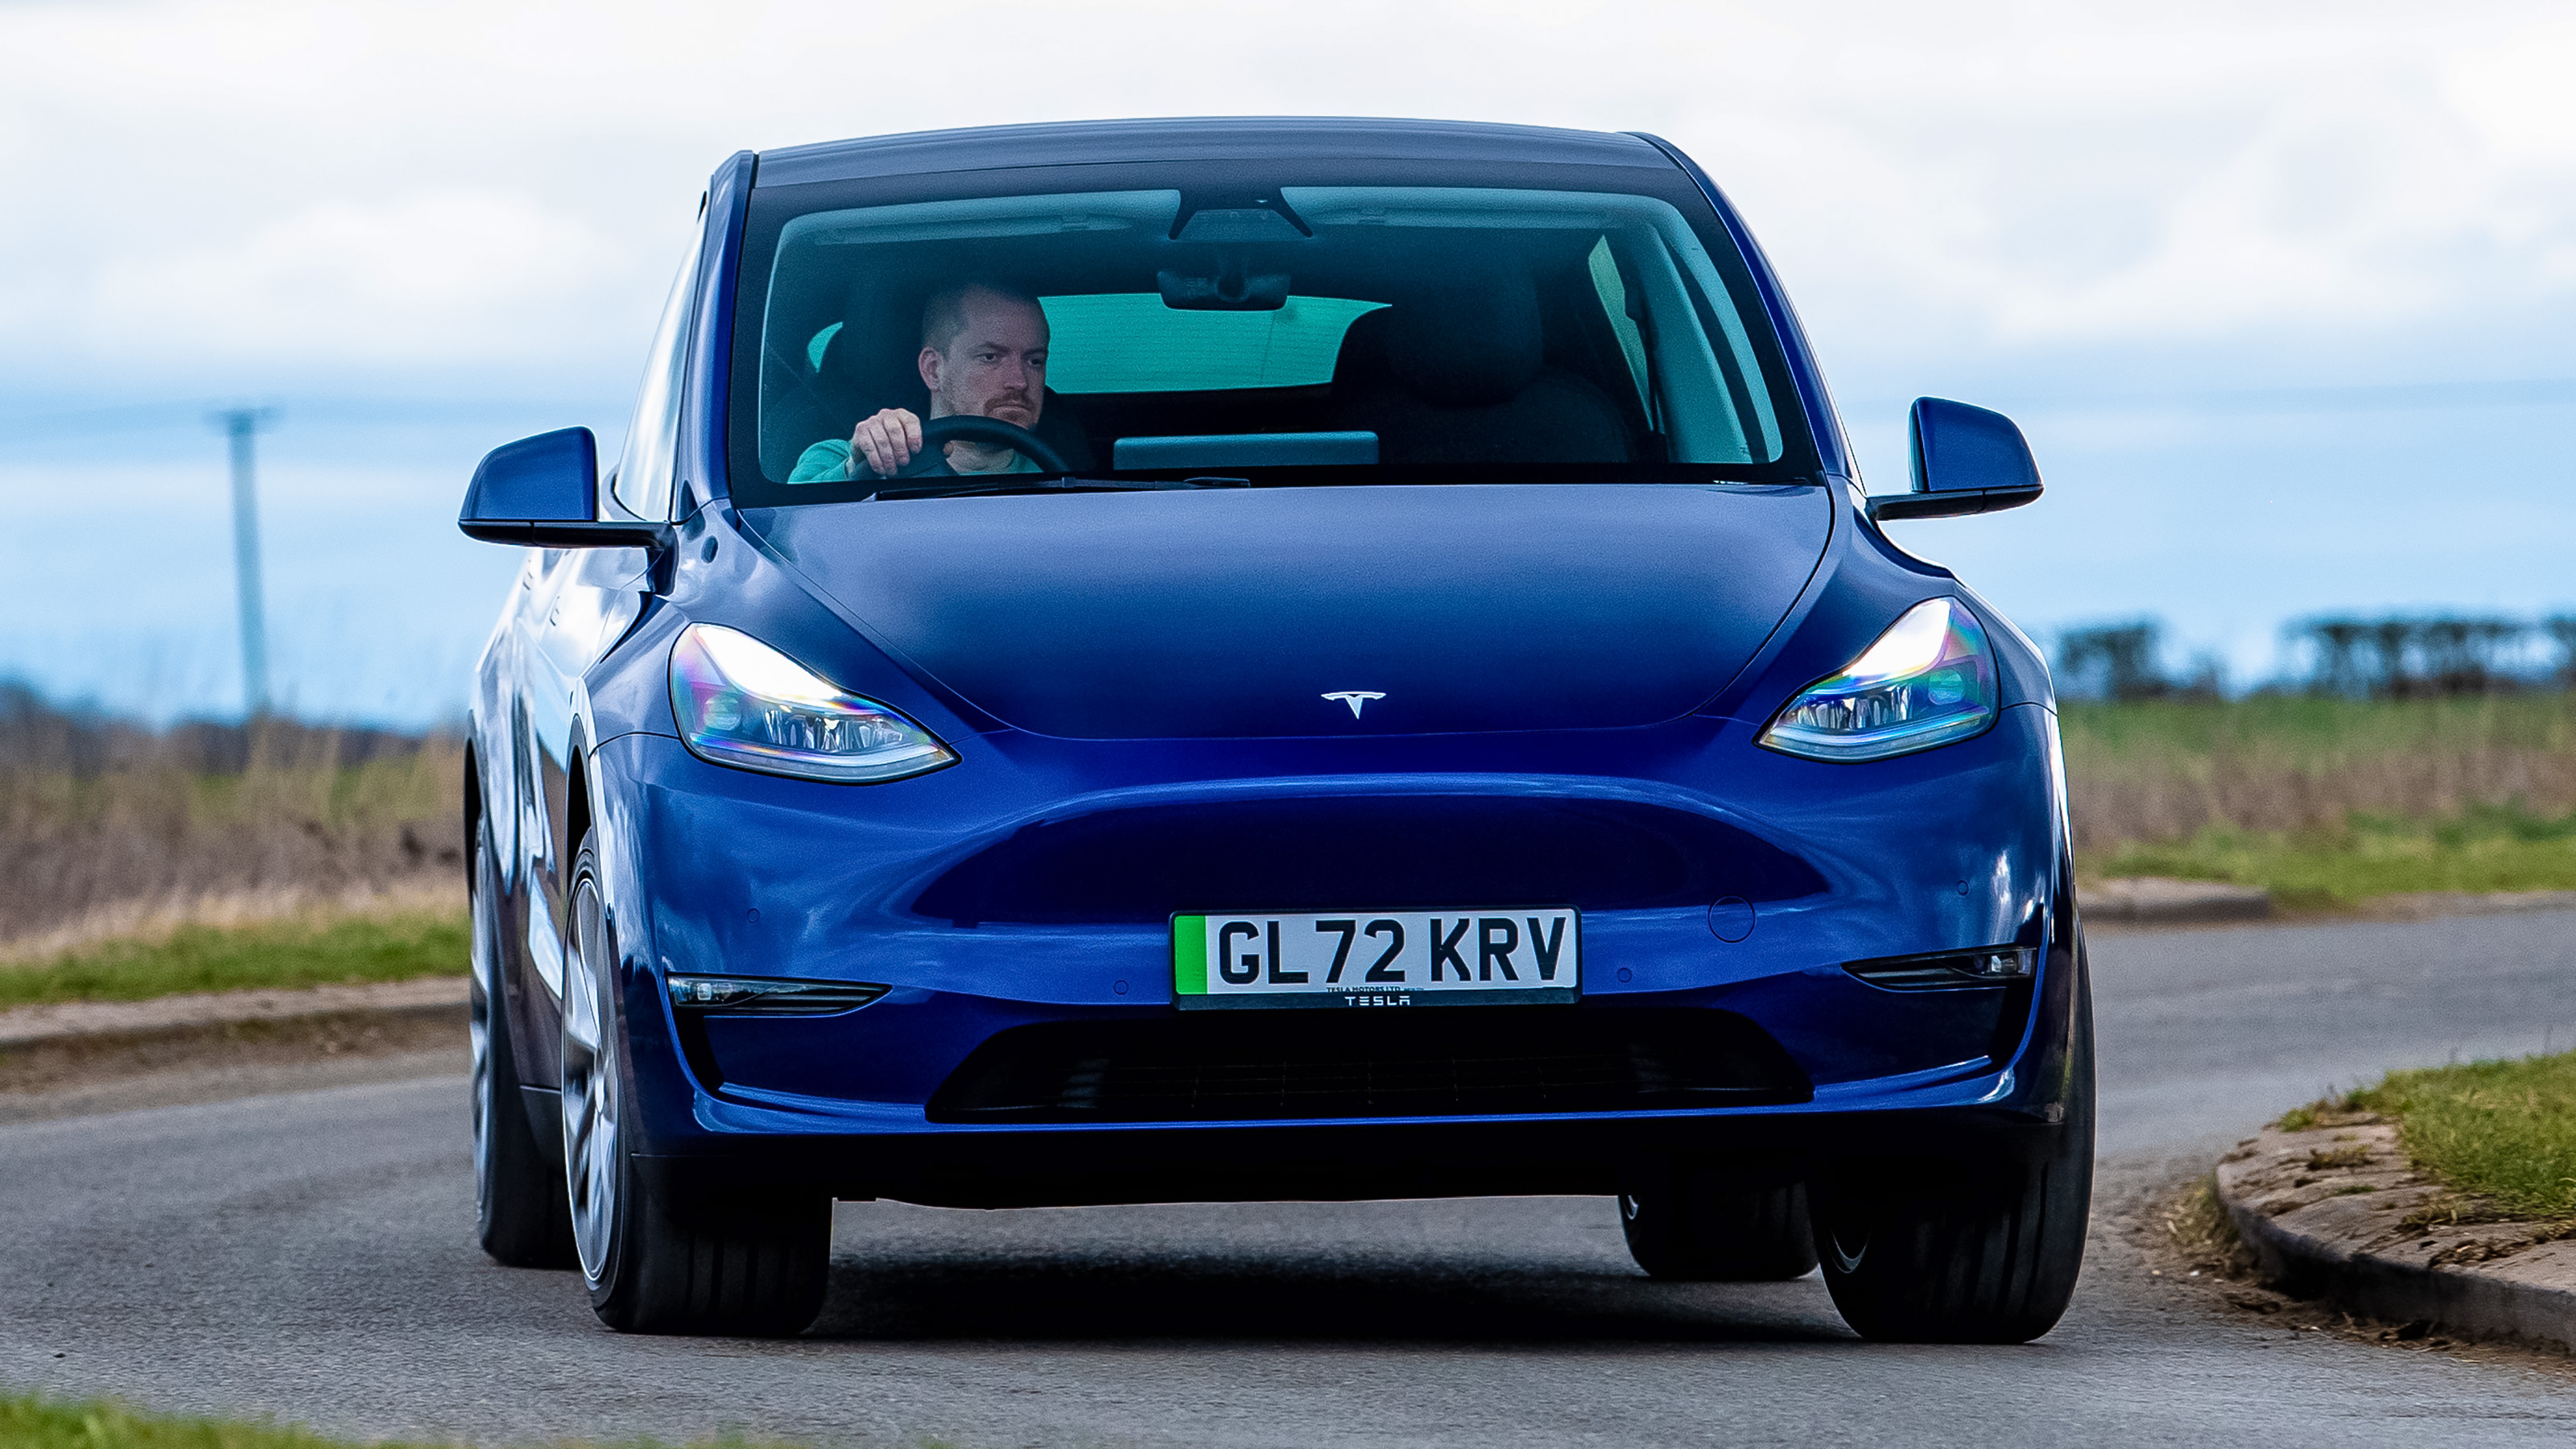 Tesla Model Y: performance, motor & drive